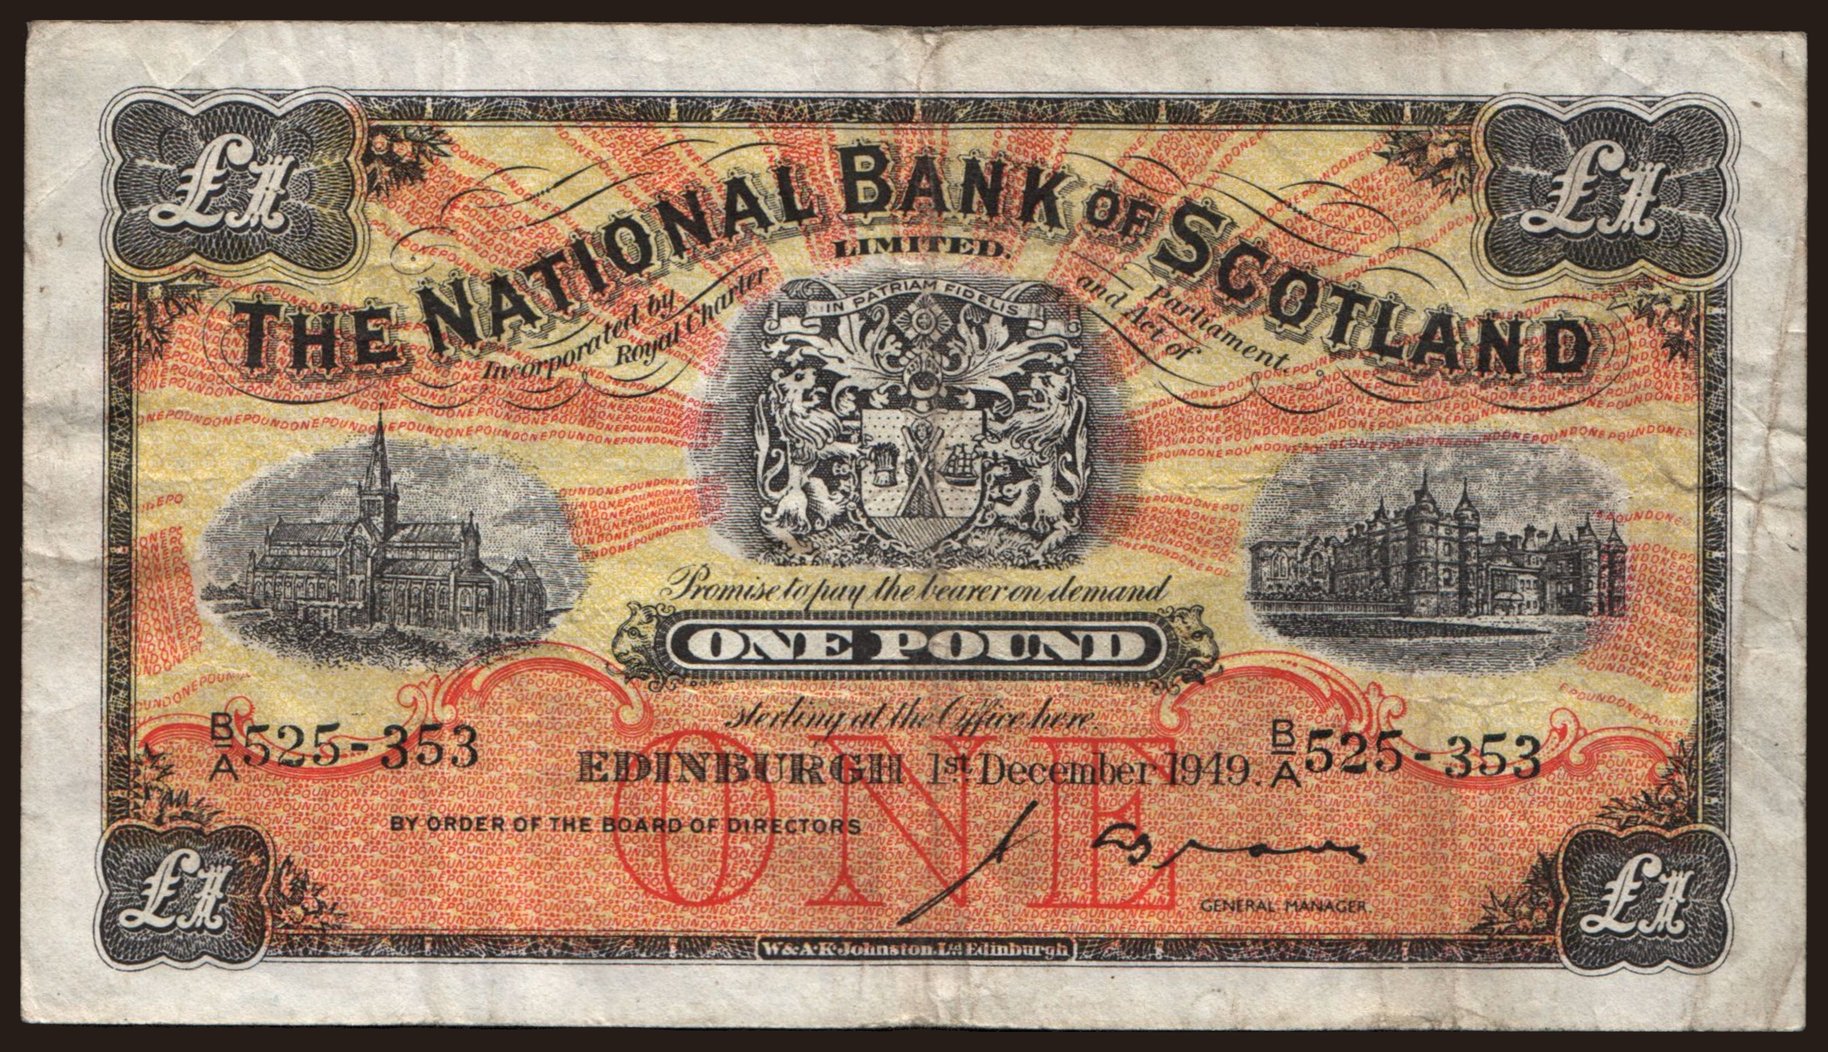 National Bank of Scotland, 1 pound, 1949